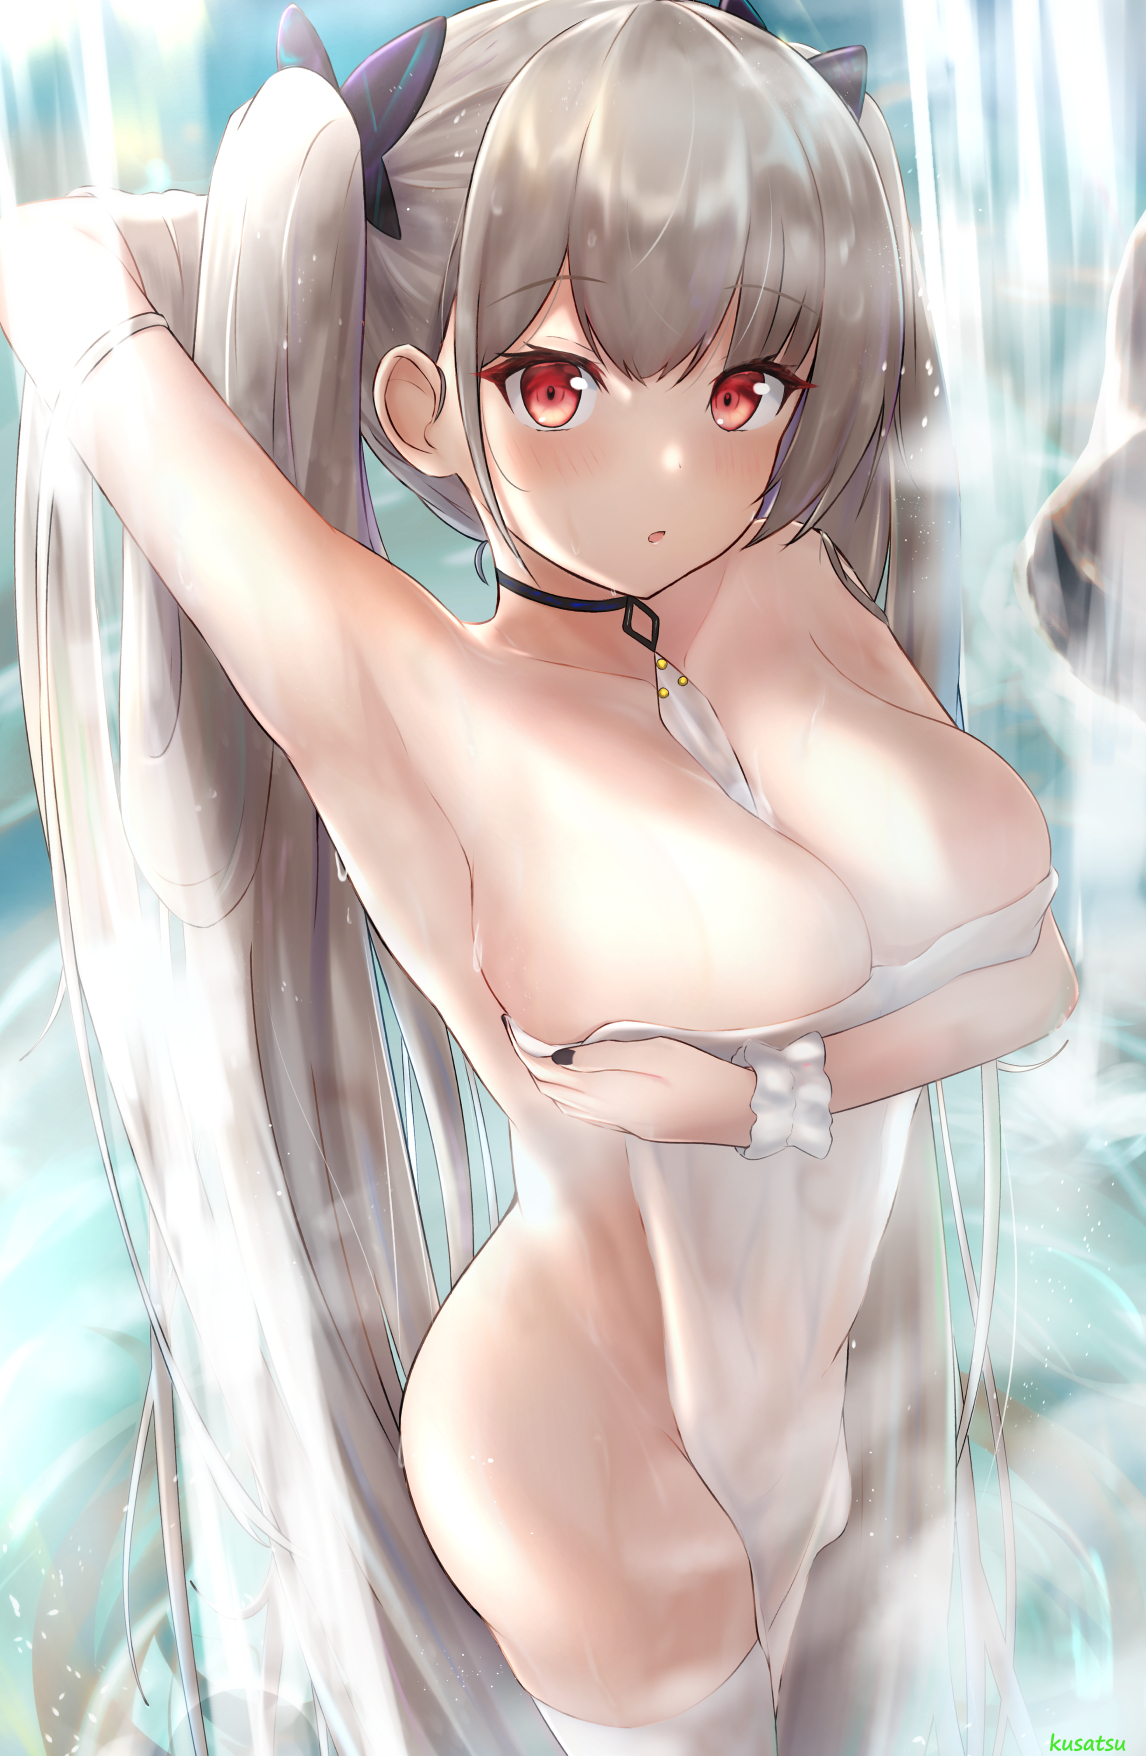 Anime girl holding boobs nude